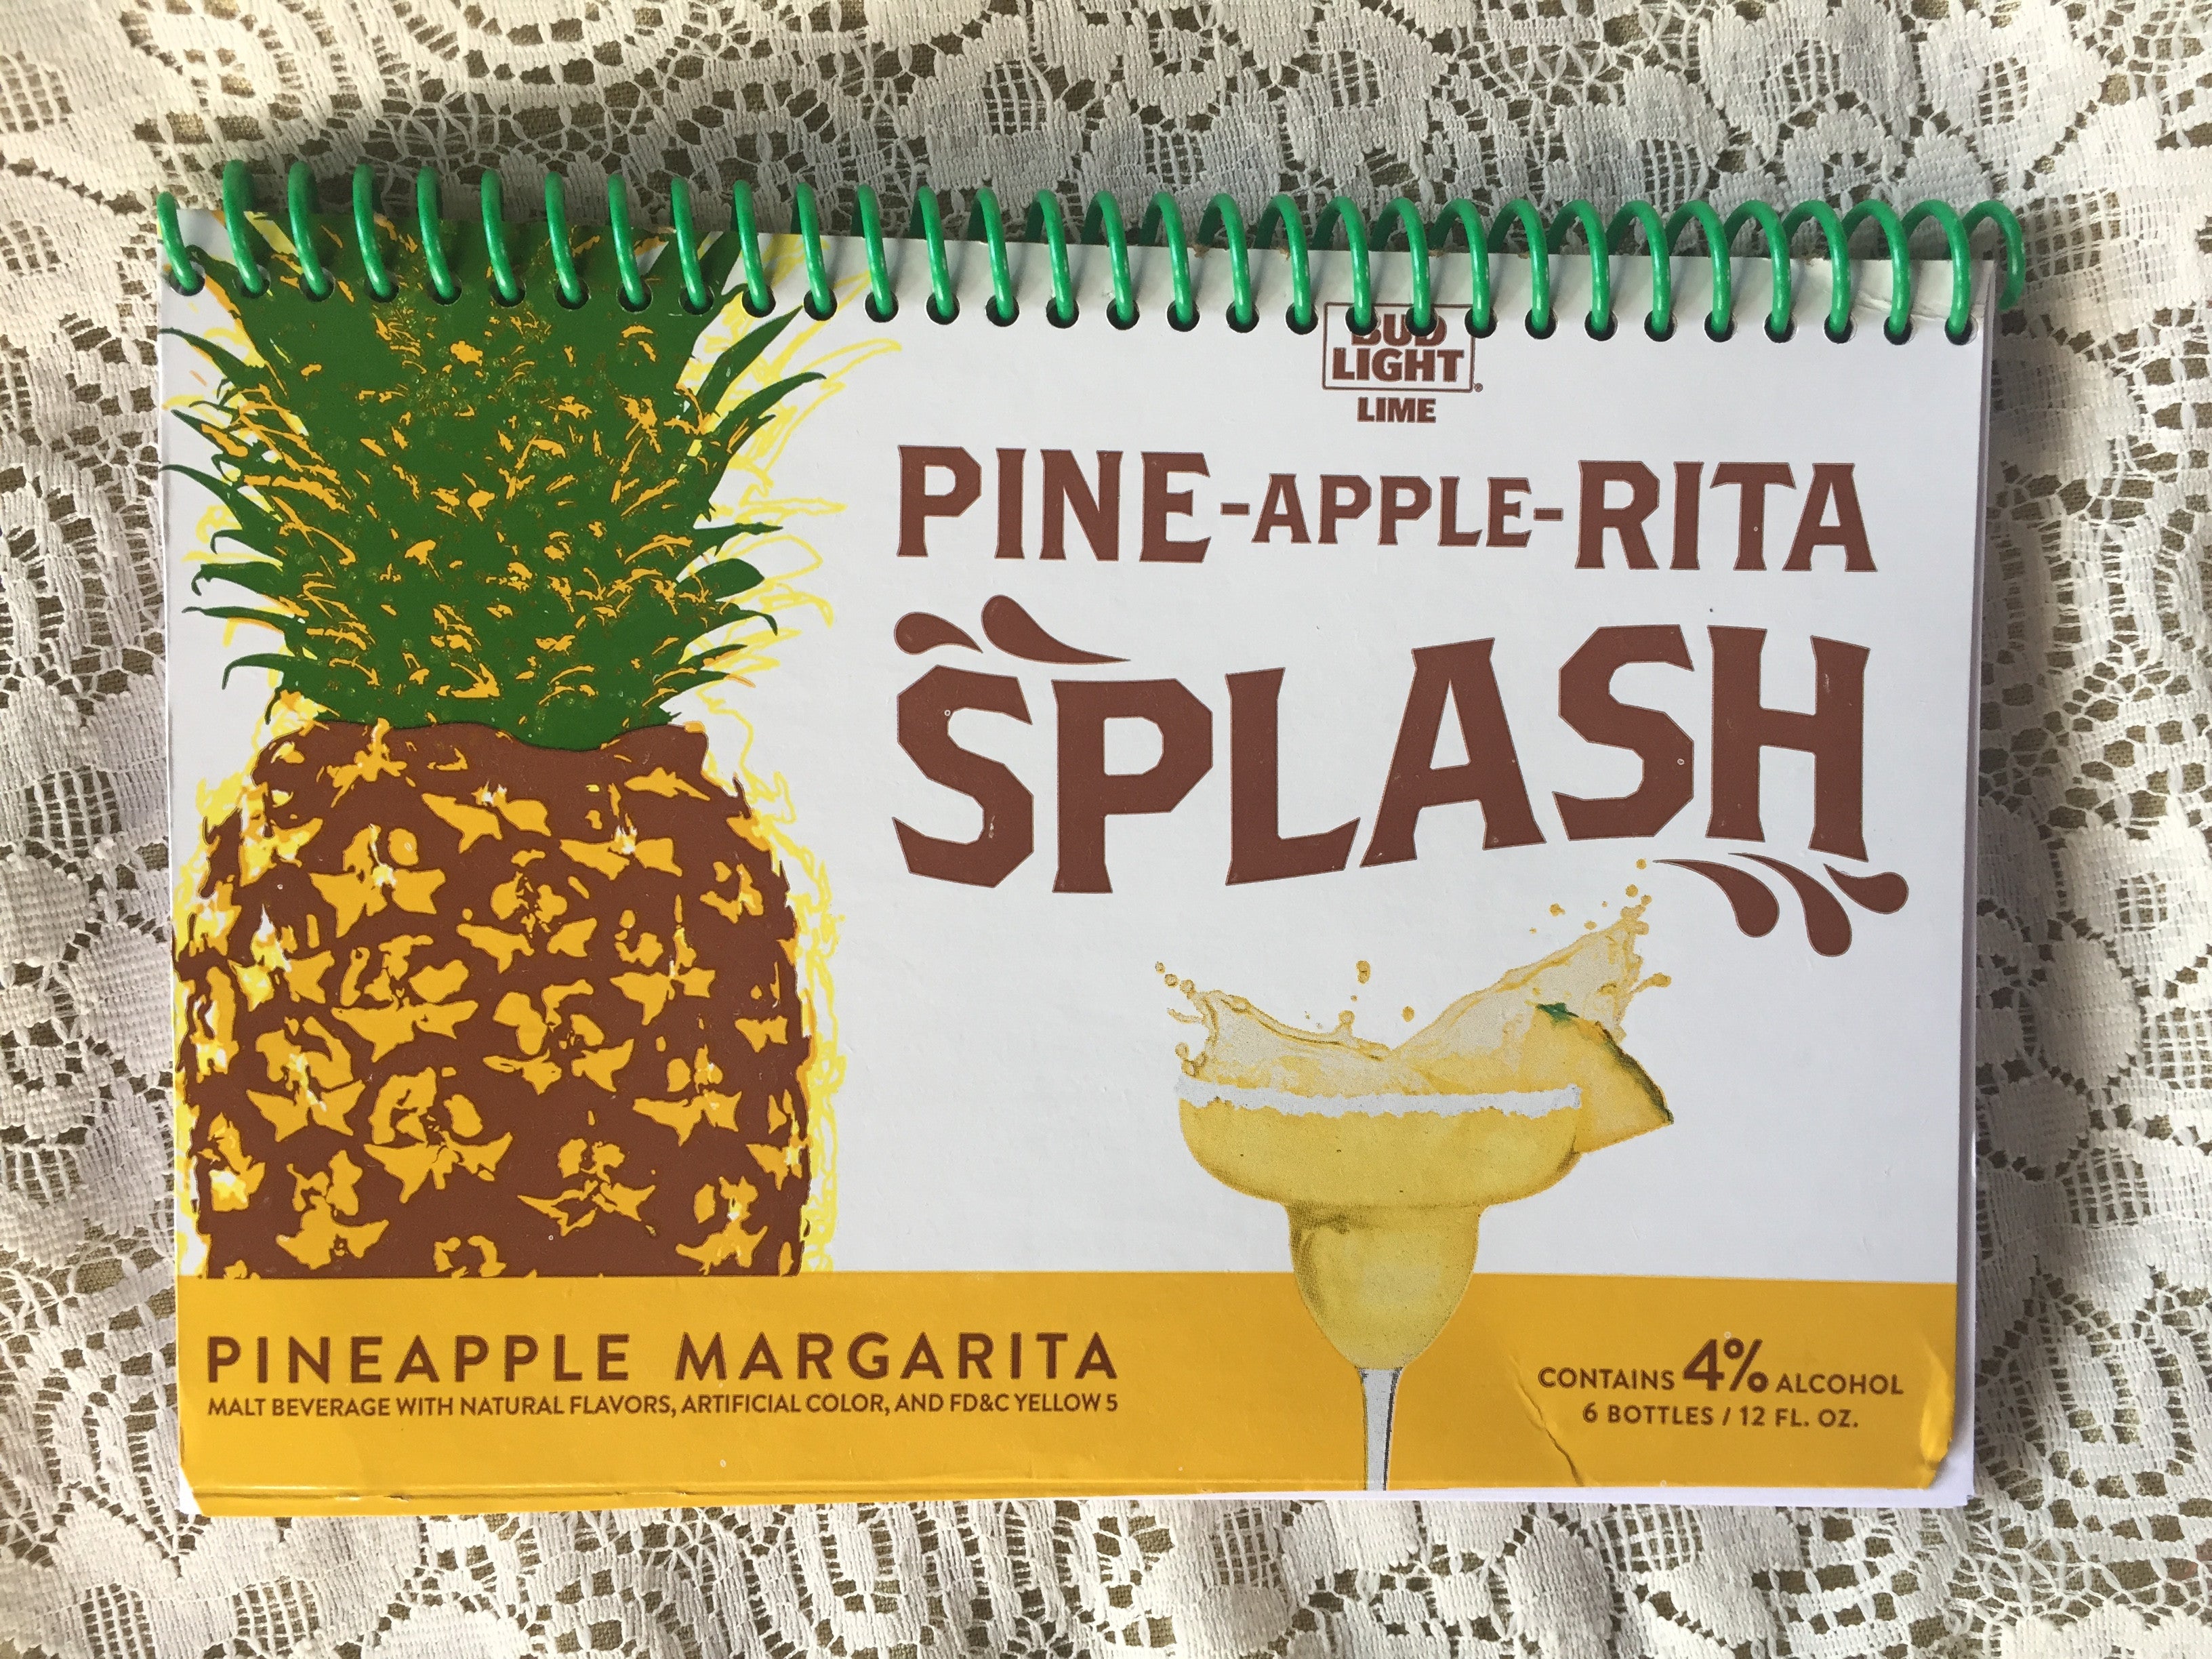 Pine-Apple-Rita Splash Recycled Beer Carton Notebook